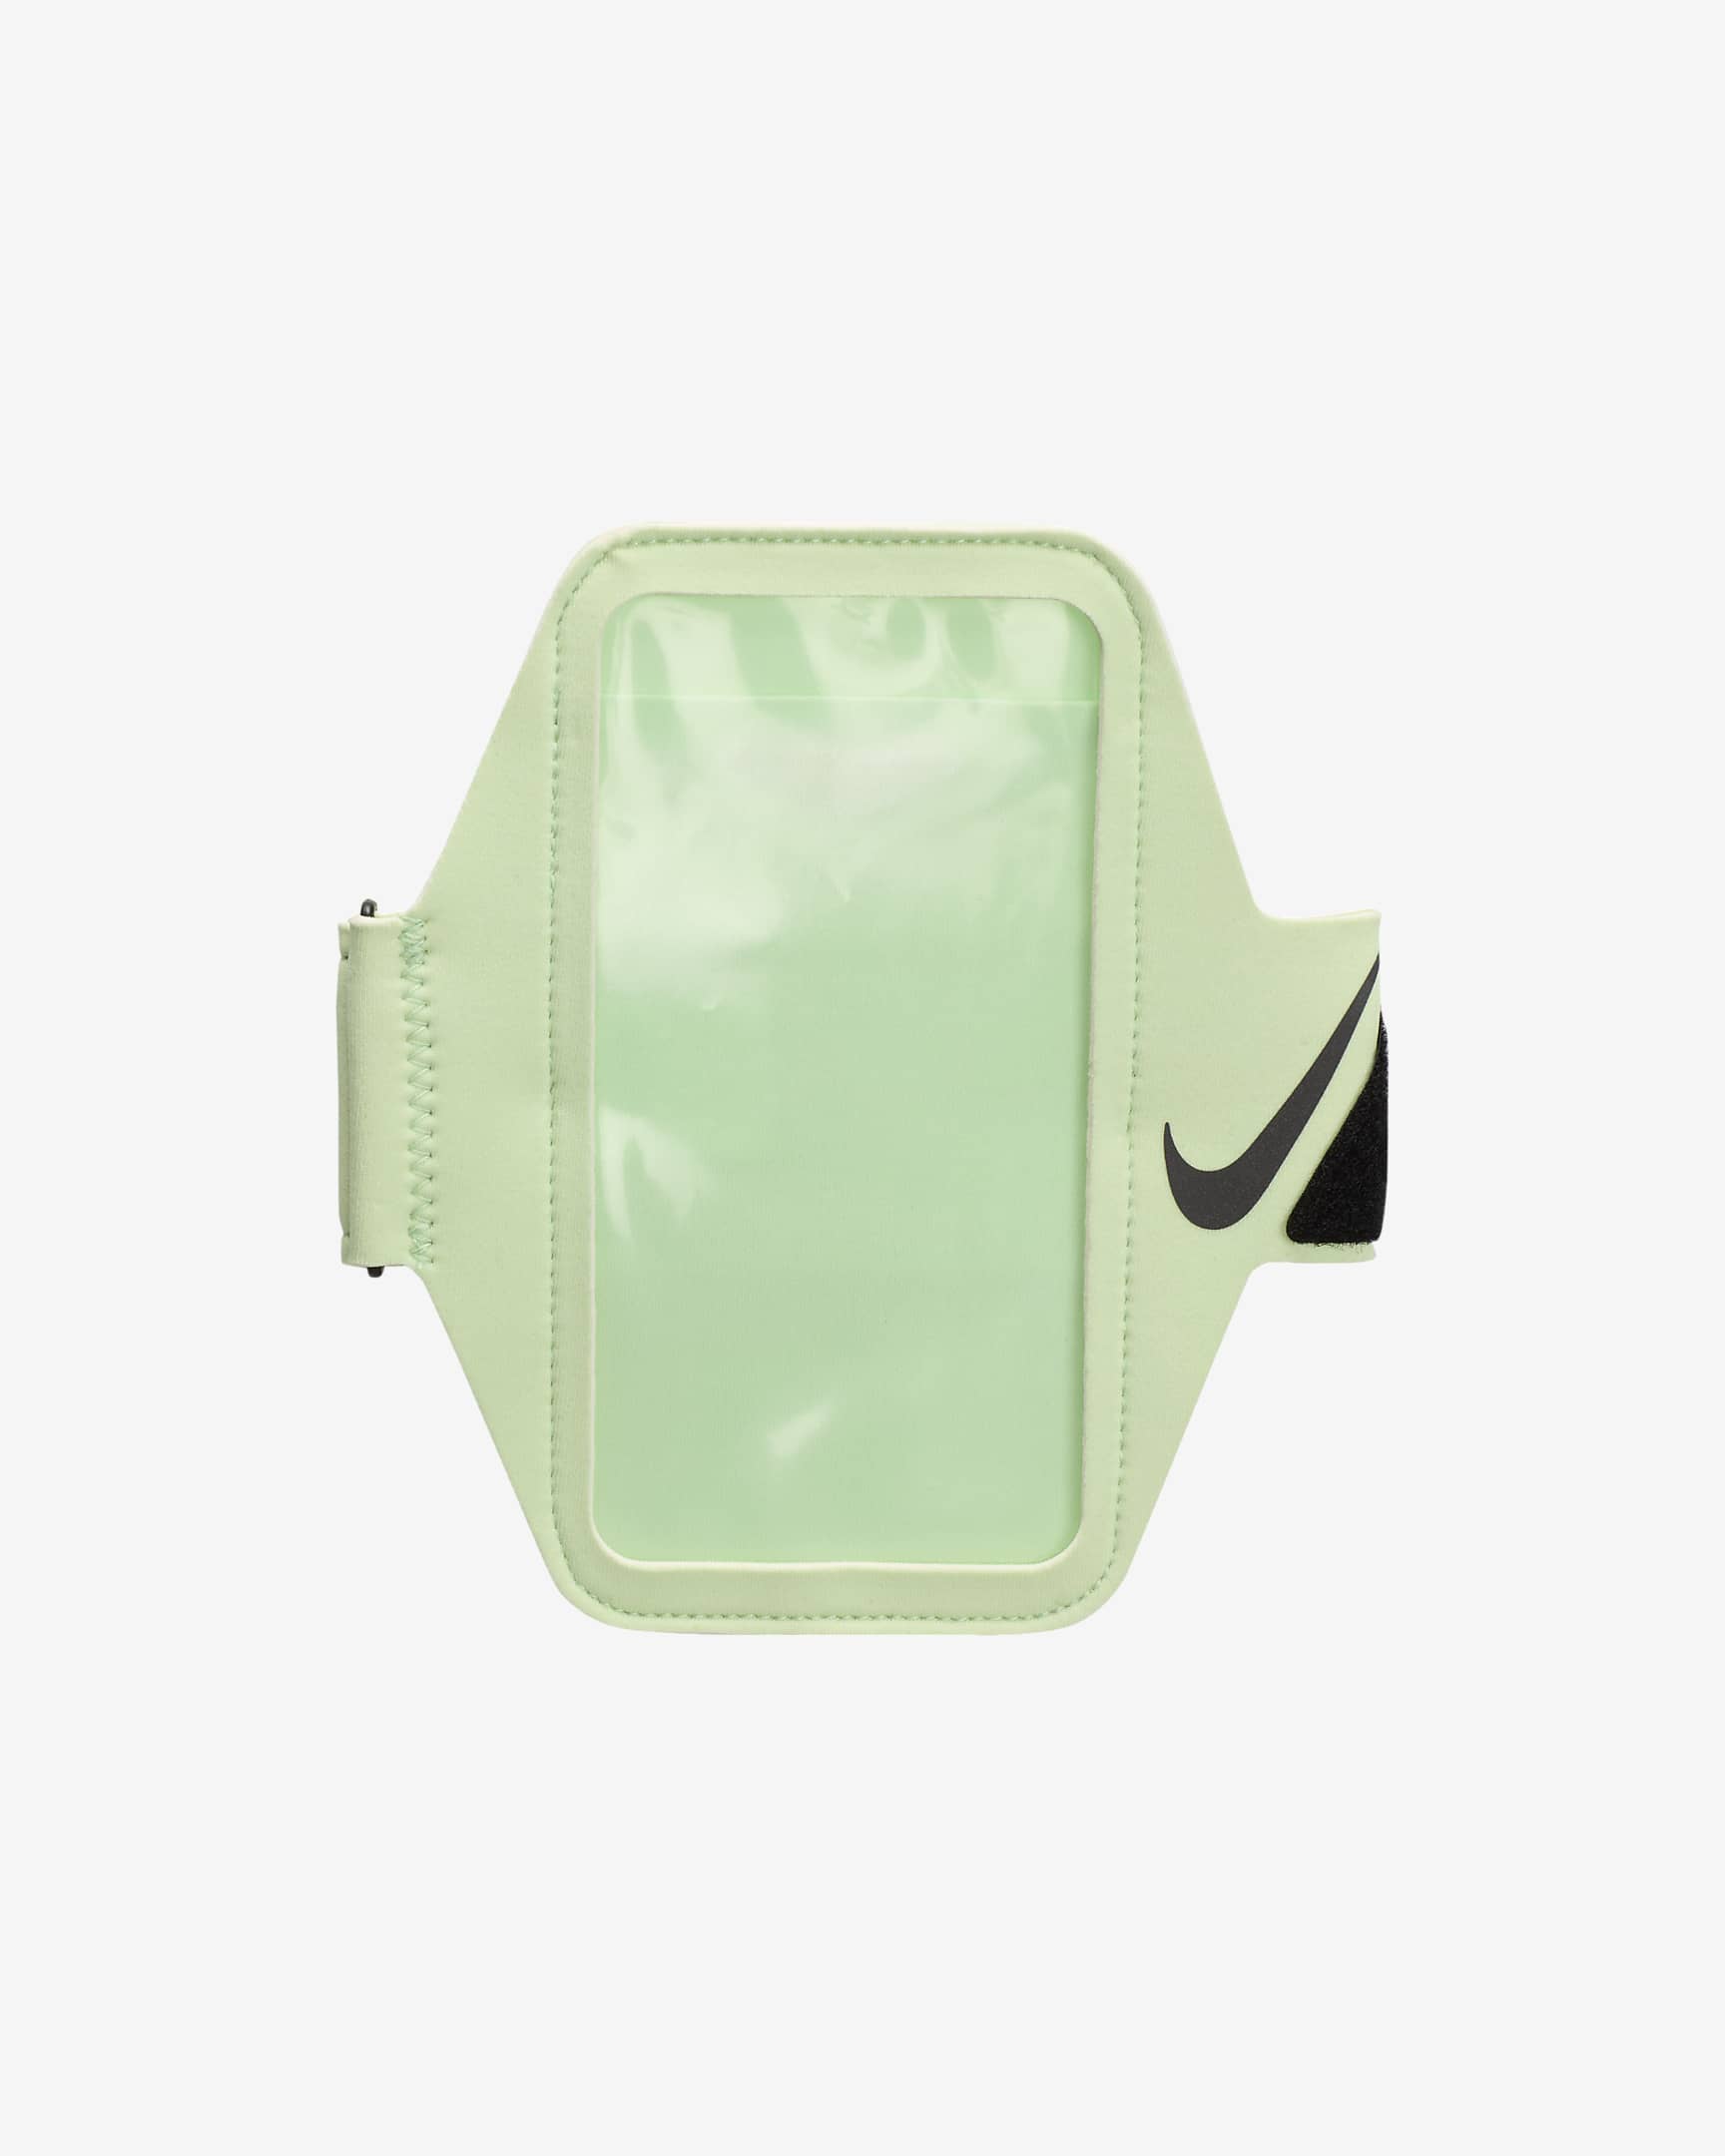 Brassard Nike Lean Plus - Vapor Green/Noir/Noir